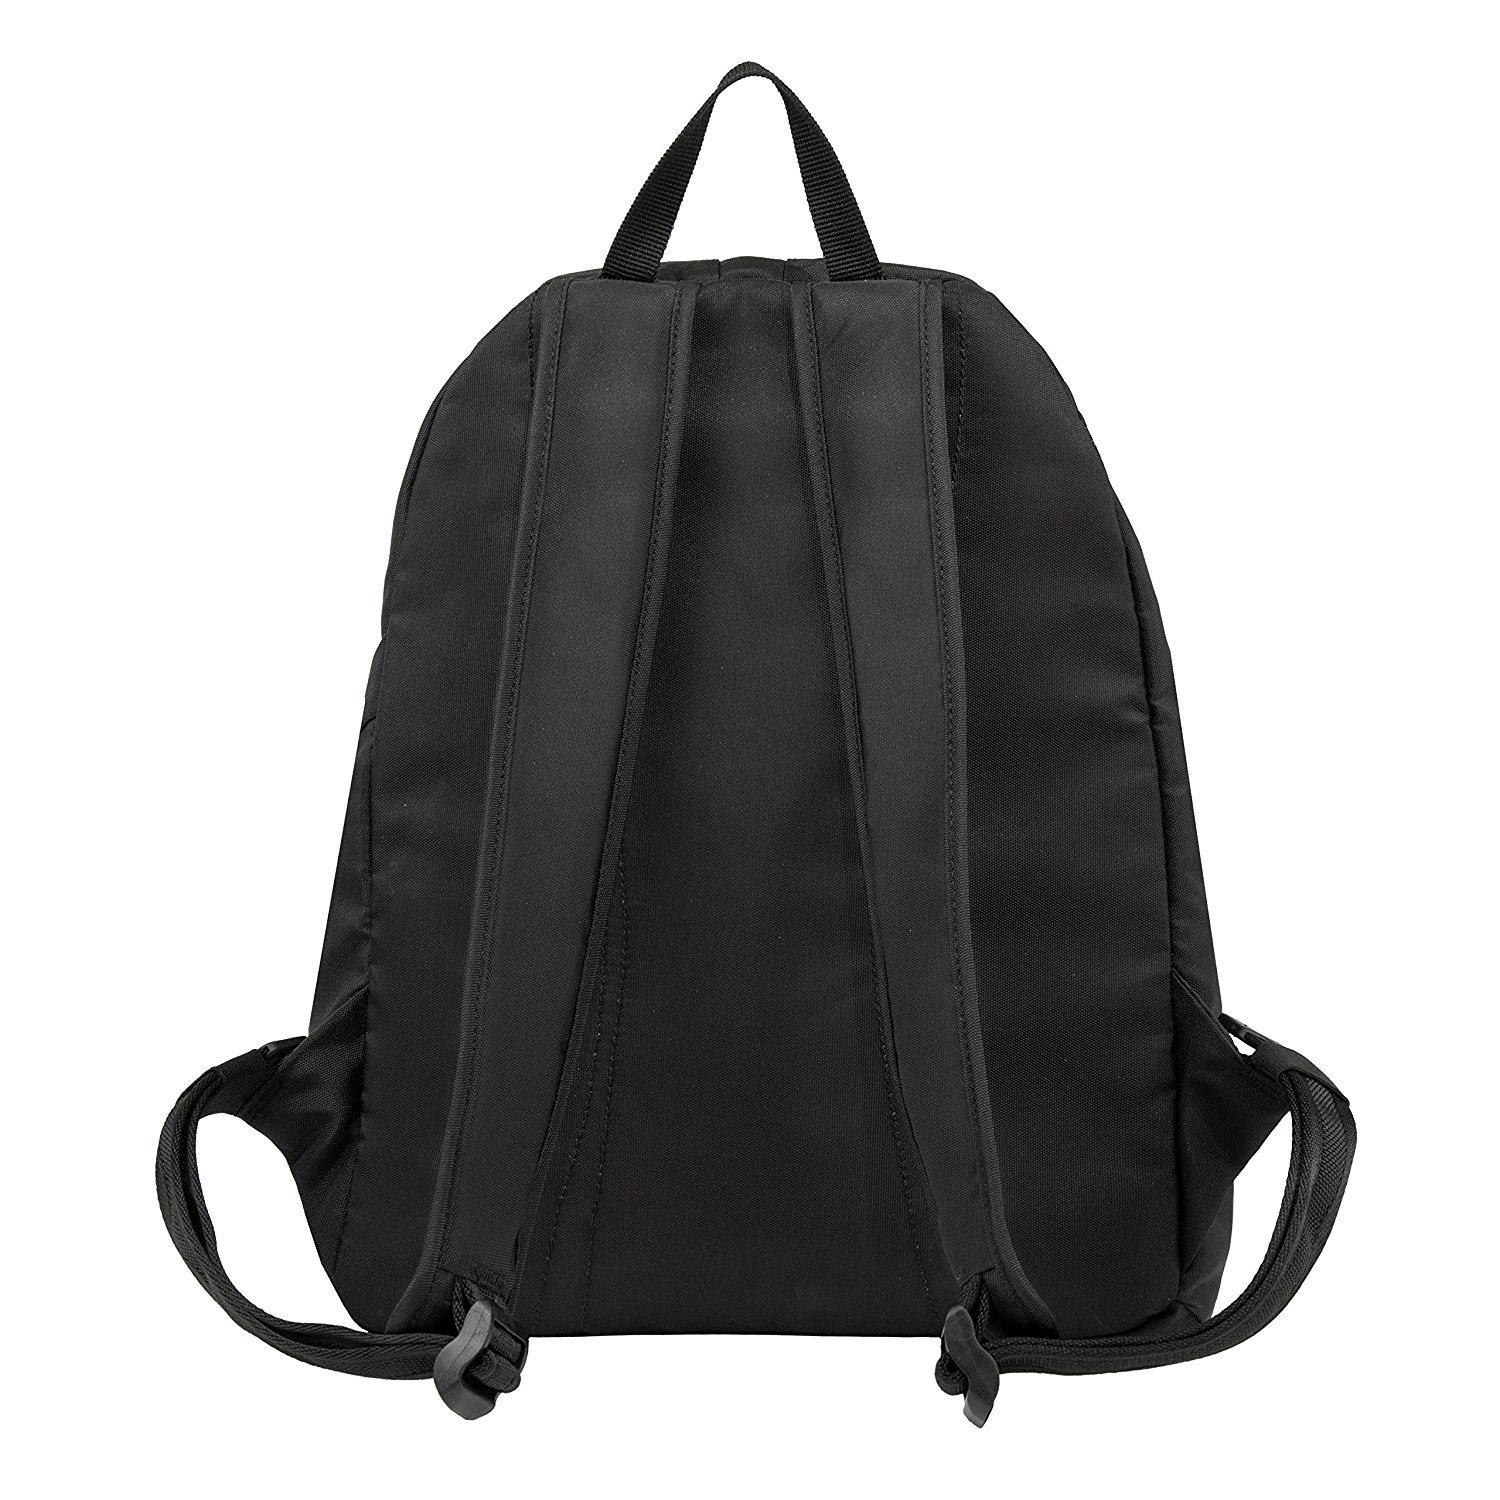 Travelon Anti-Theft Classic 18 Litre Backpack - Black- BRAND NEW! 9313059083001 | eBay